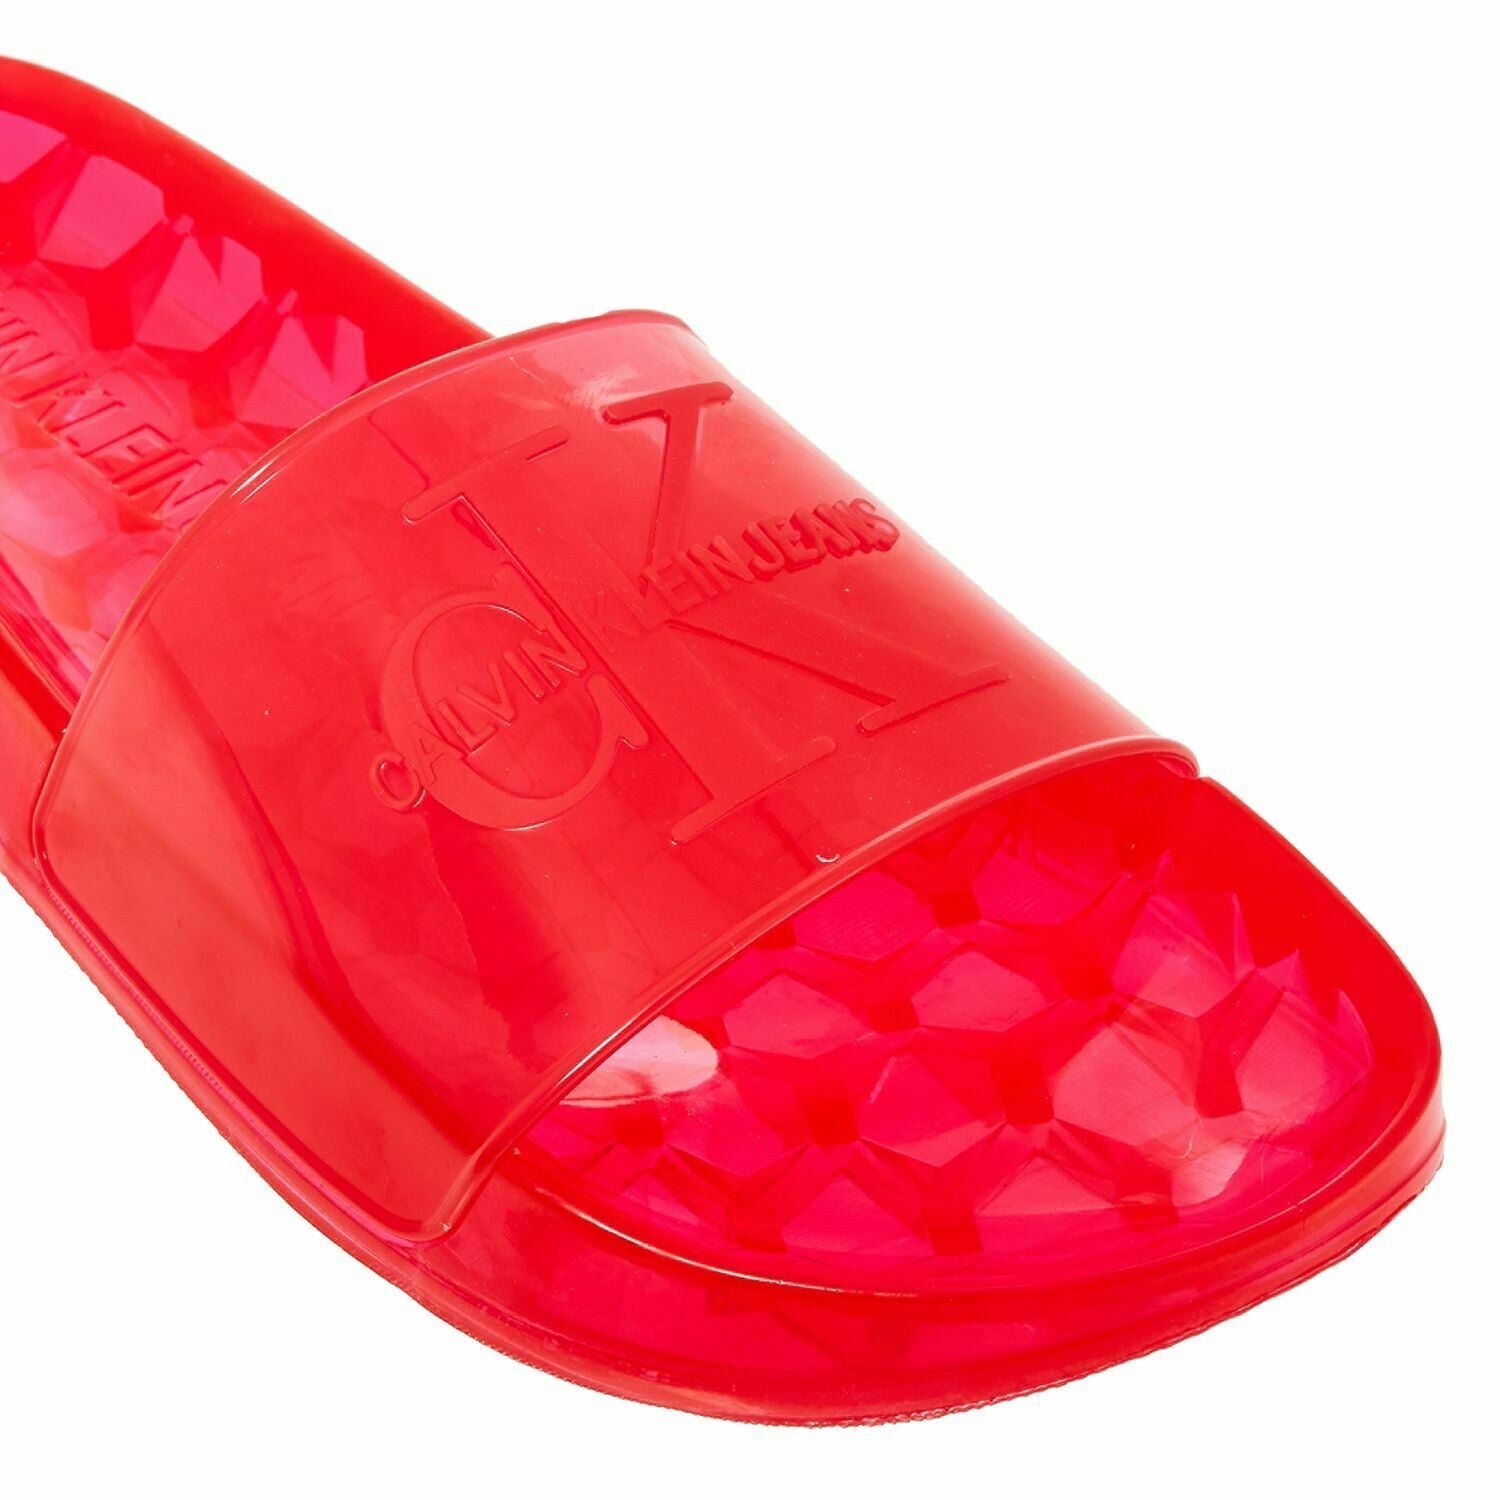 CALVIN KLEIN JEANS Women's ELVA Translucent Rubber Sliders Sandals, Red, UK 4